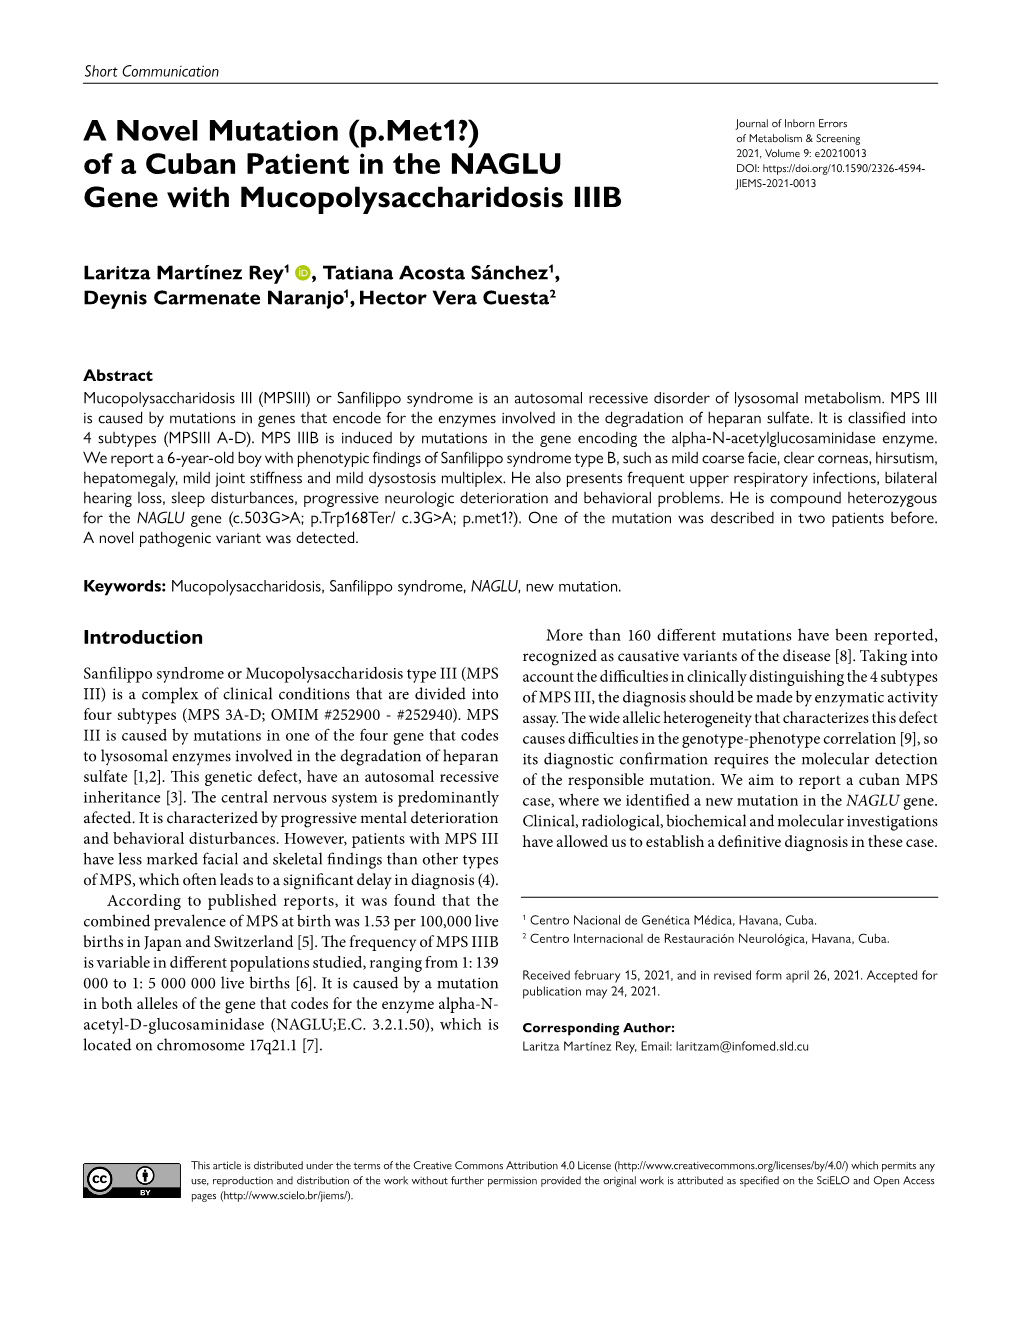 A Novel Mutation (P.Met1?) of a Cuban Patient in the NAGLU Gene